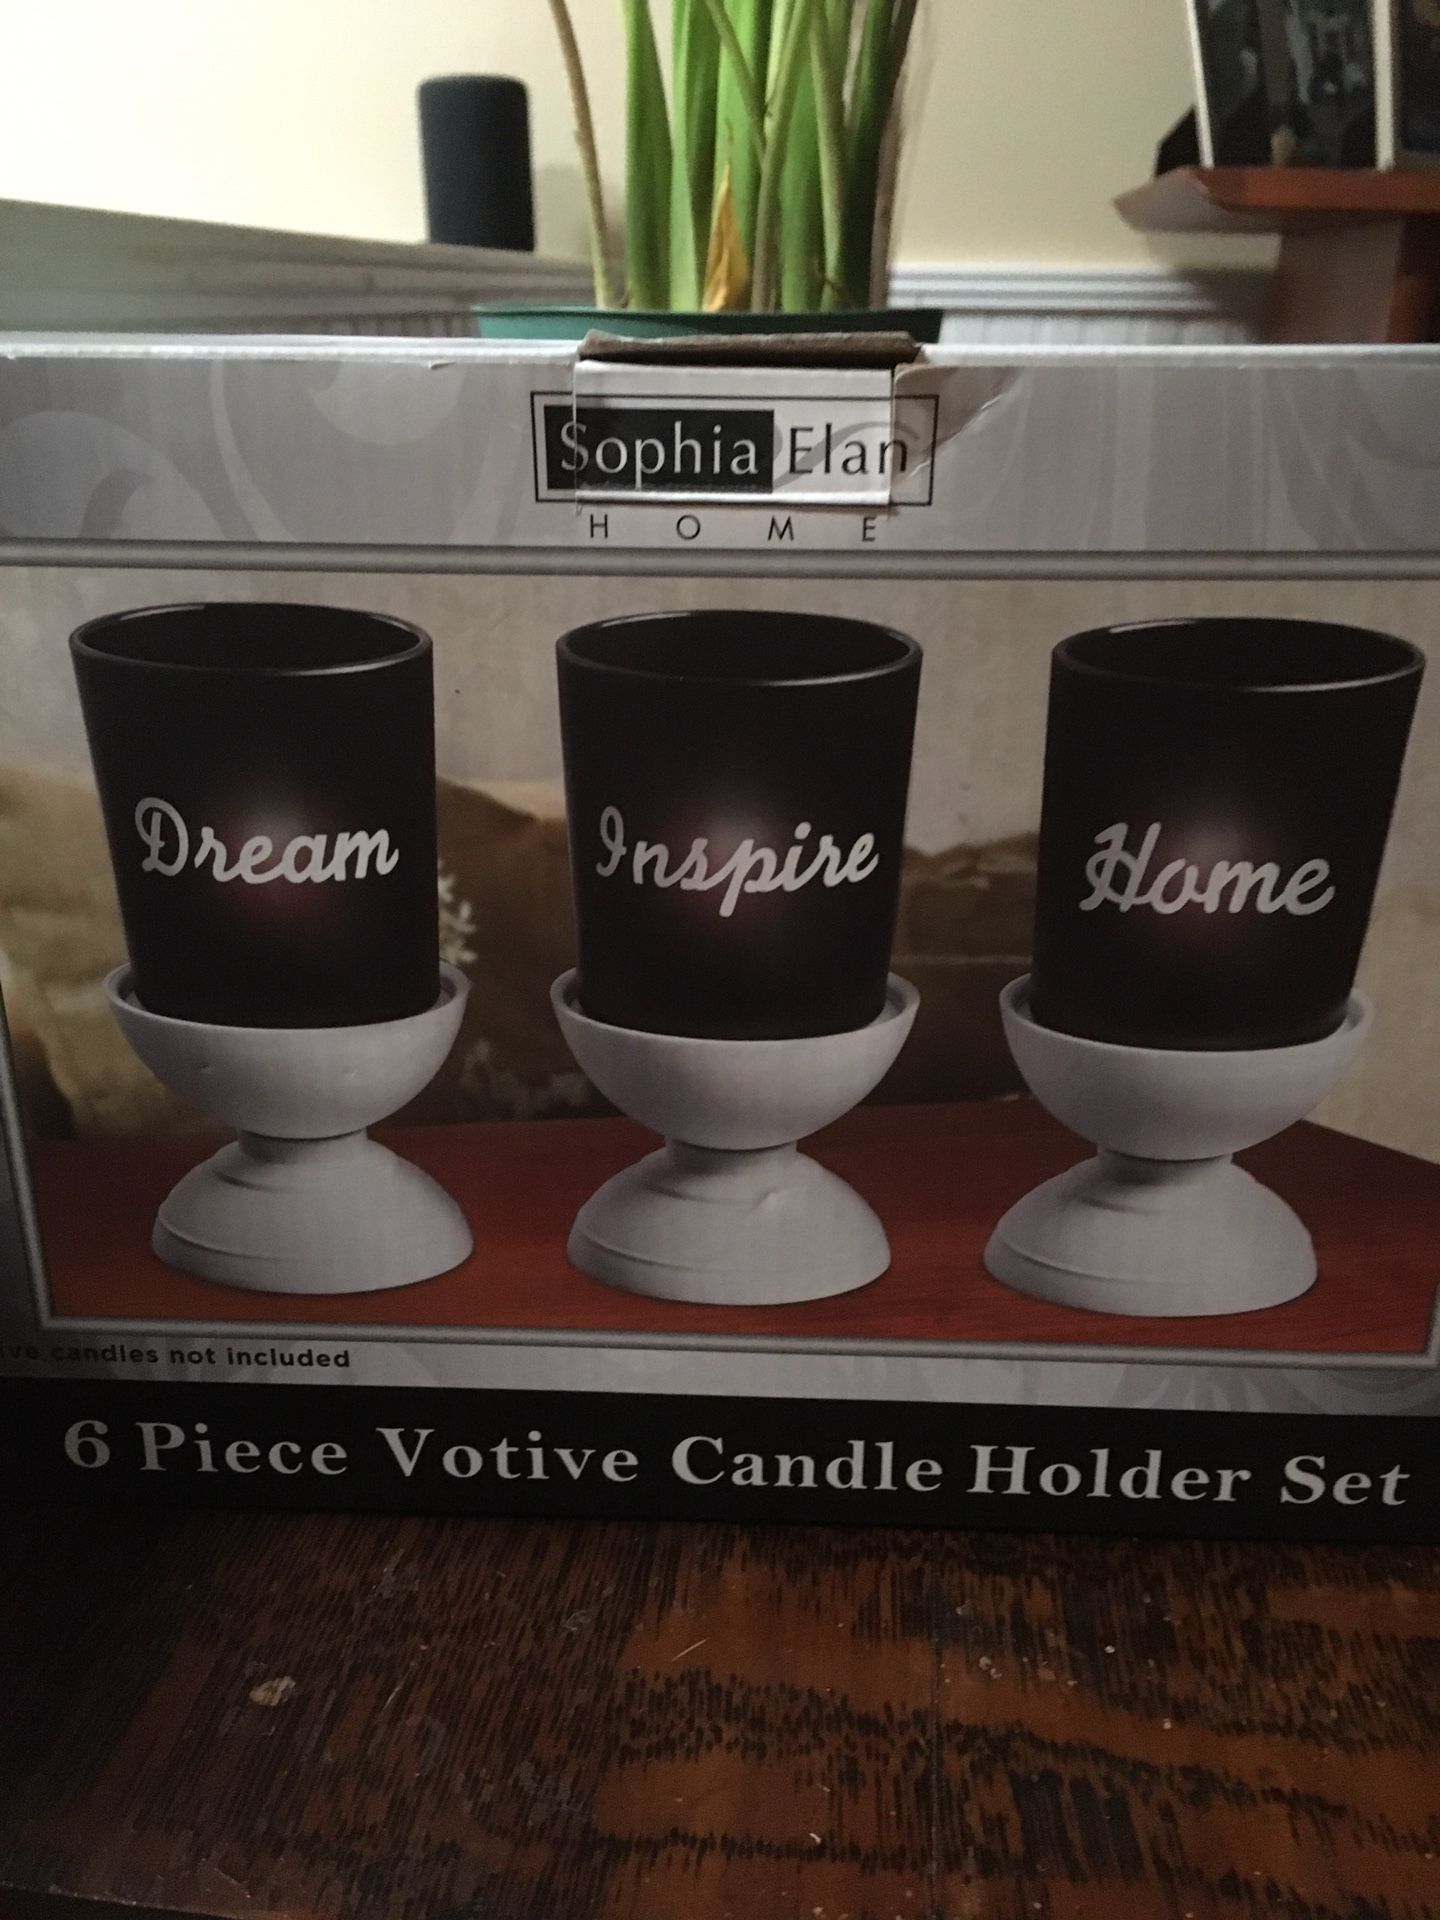 Brand new in box. 6 piece votive candle holder set